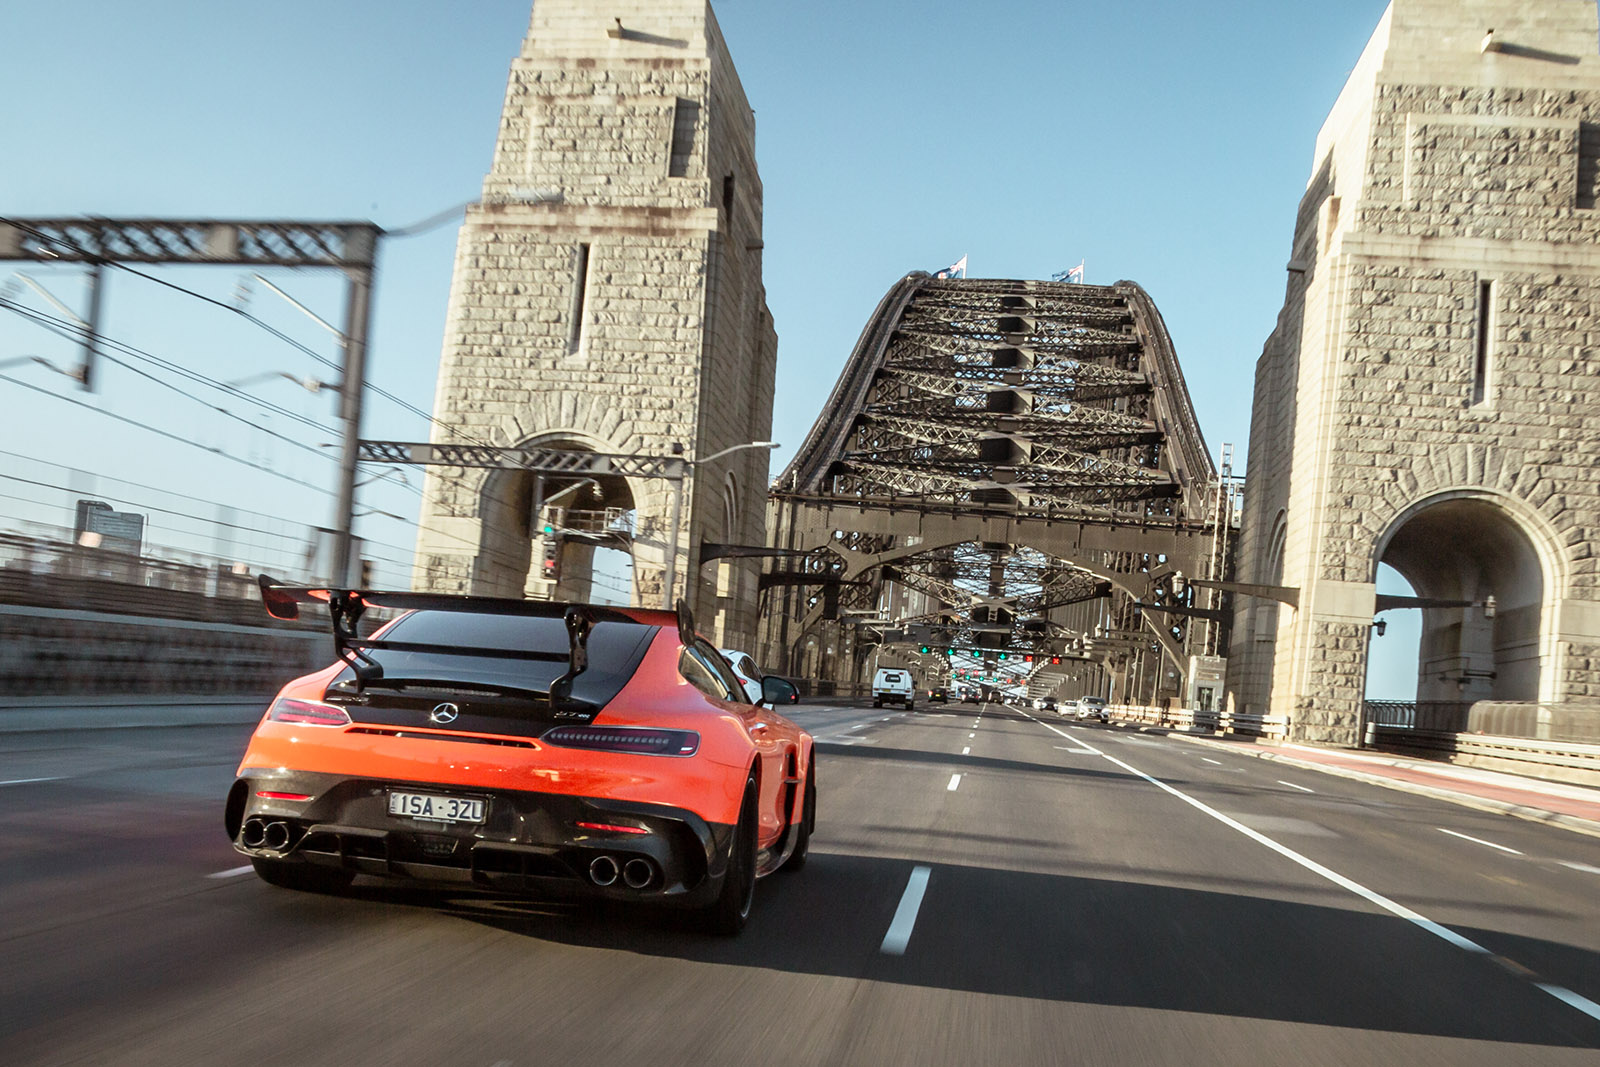 aria-label="2021 Mercedes AMG GT Black Australia sydney bridge"